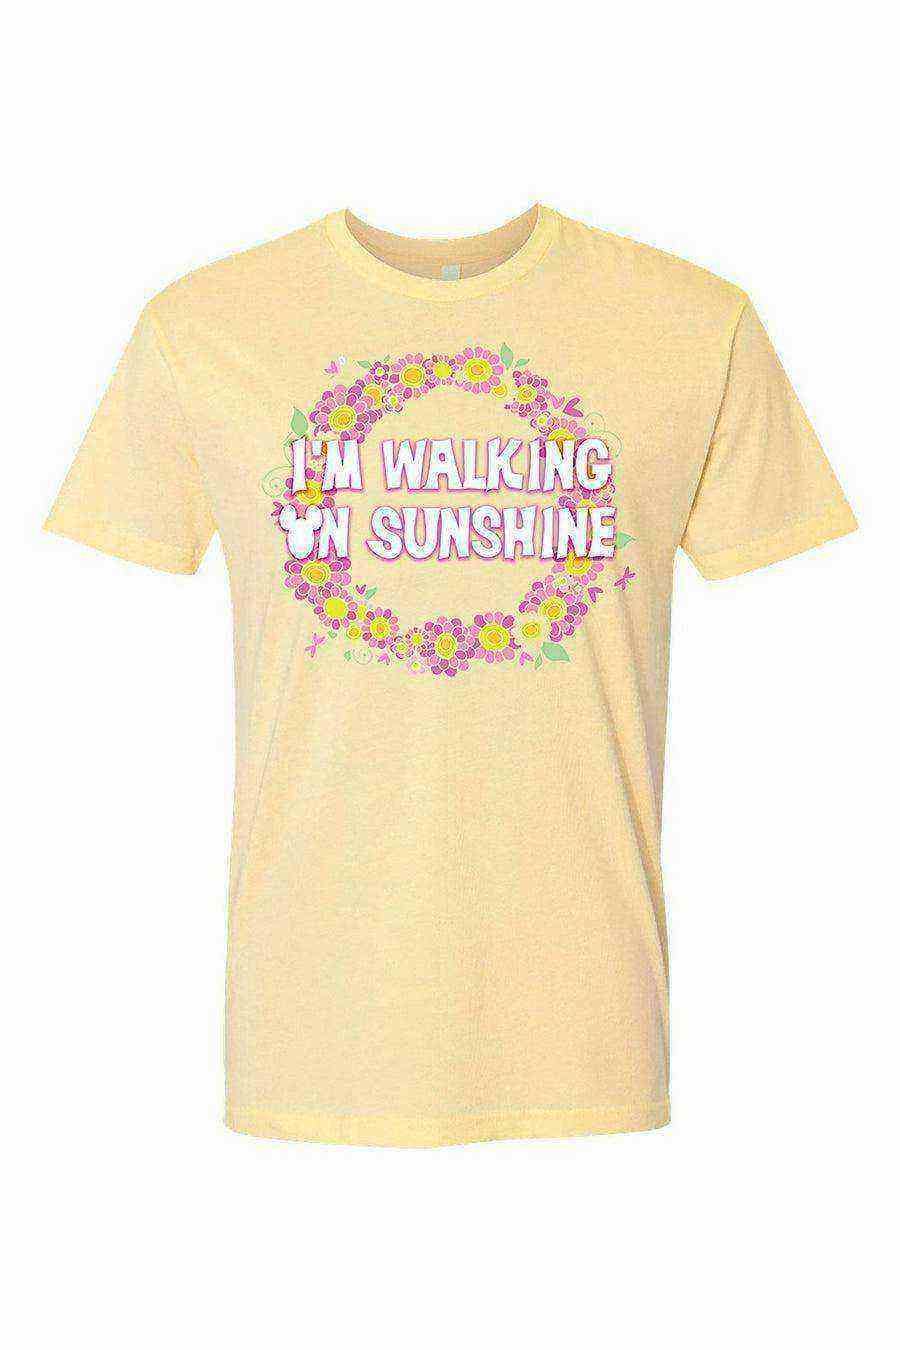 Womens | Im Walking On Sunshine Shirt | Epcot Flower and Garden Shirt - Dylan's Tees